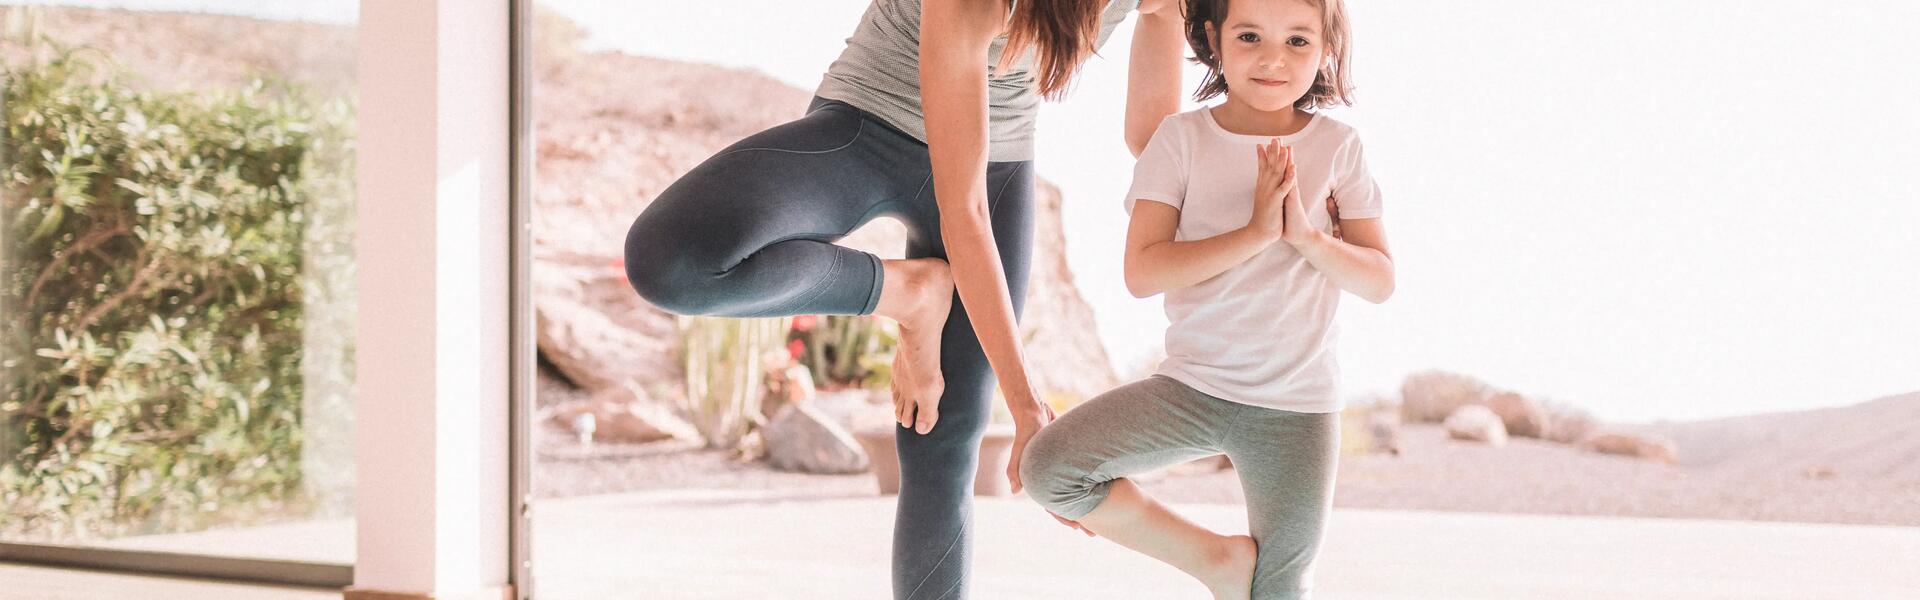 Yoga  Benefits for kids to practice yoga